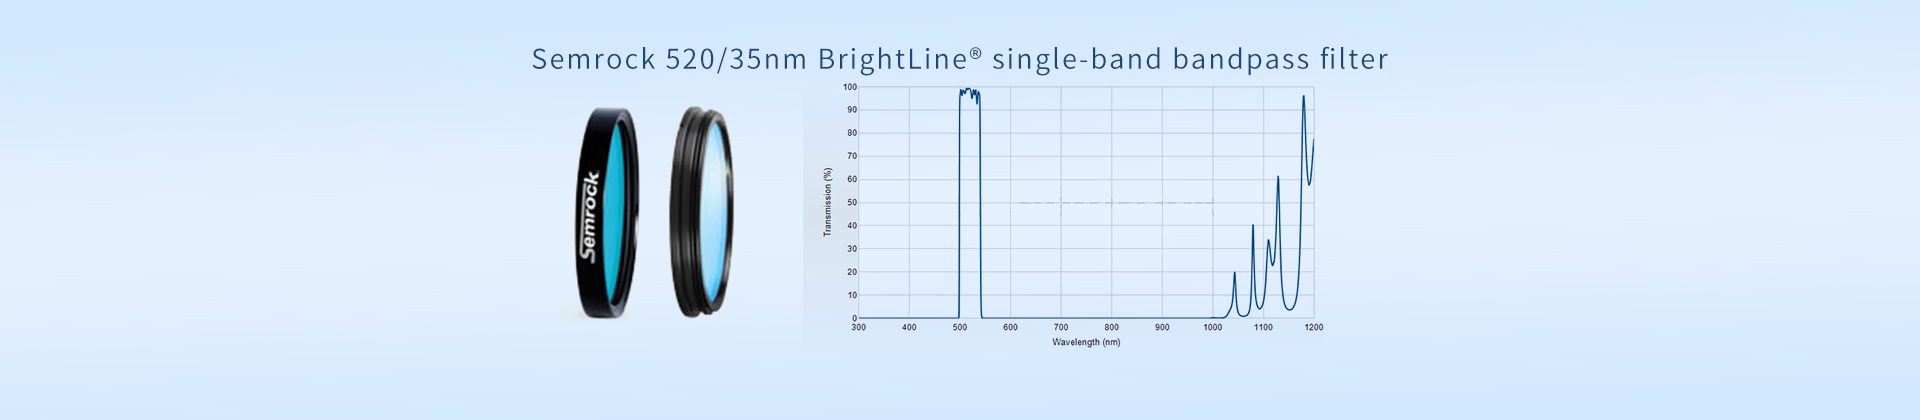 Semrock 520/35nm BrightLine® single-band bandpass filter